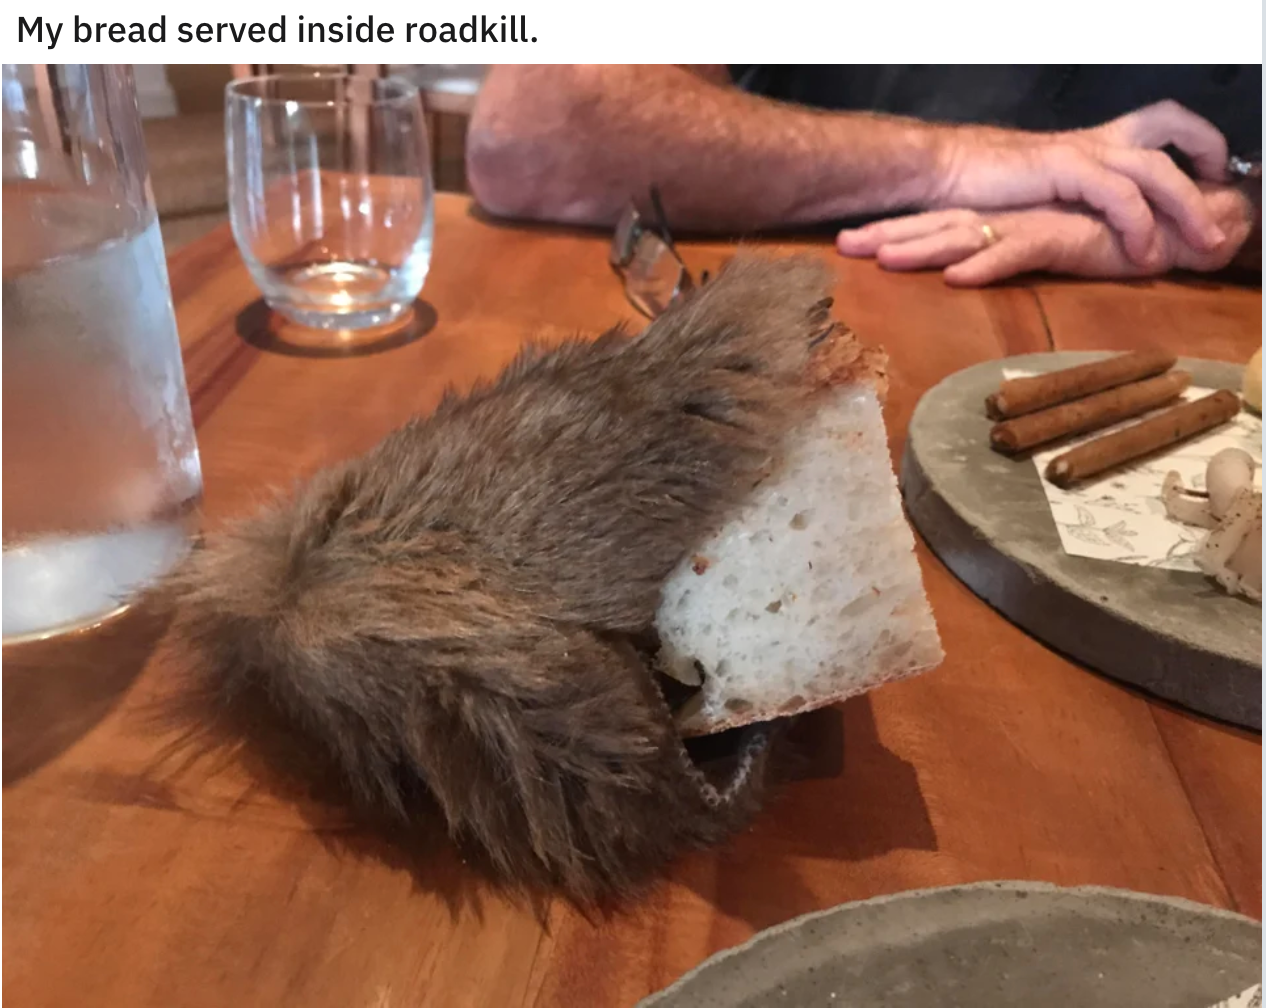 funny food pics - My bread served inside roadkill.